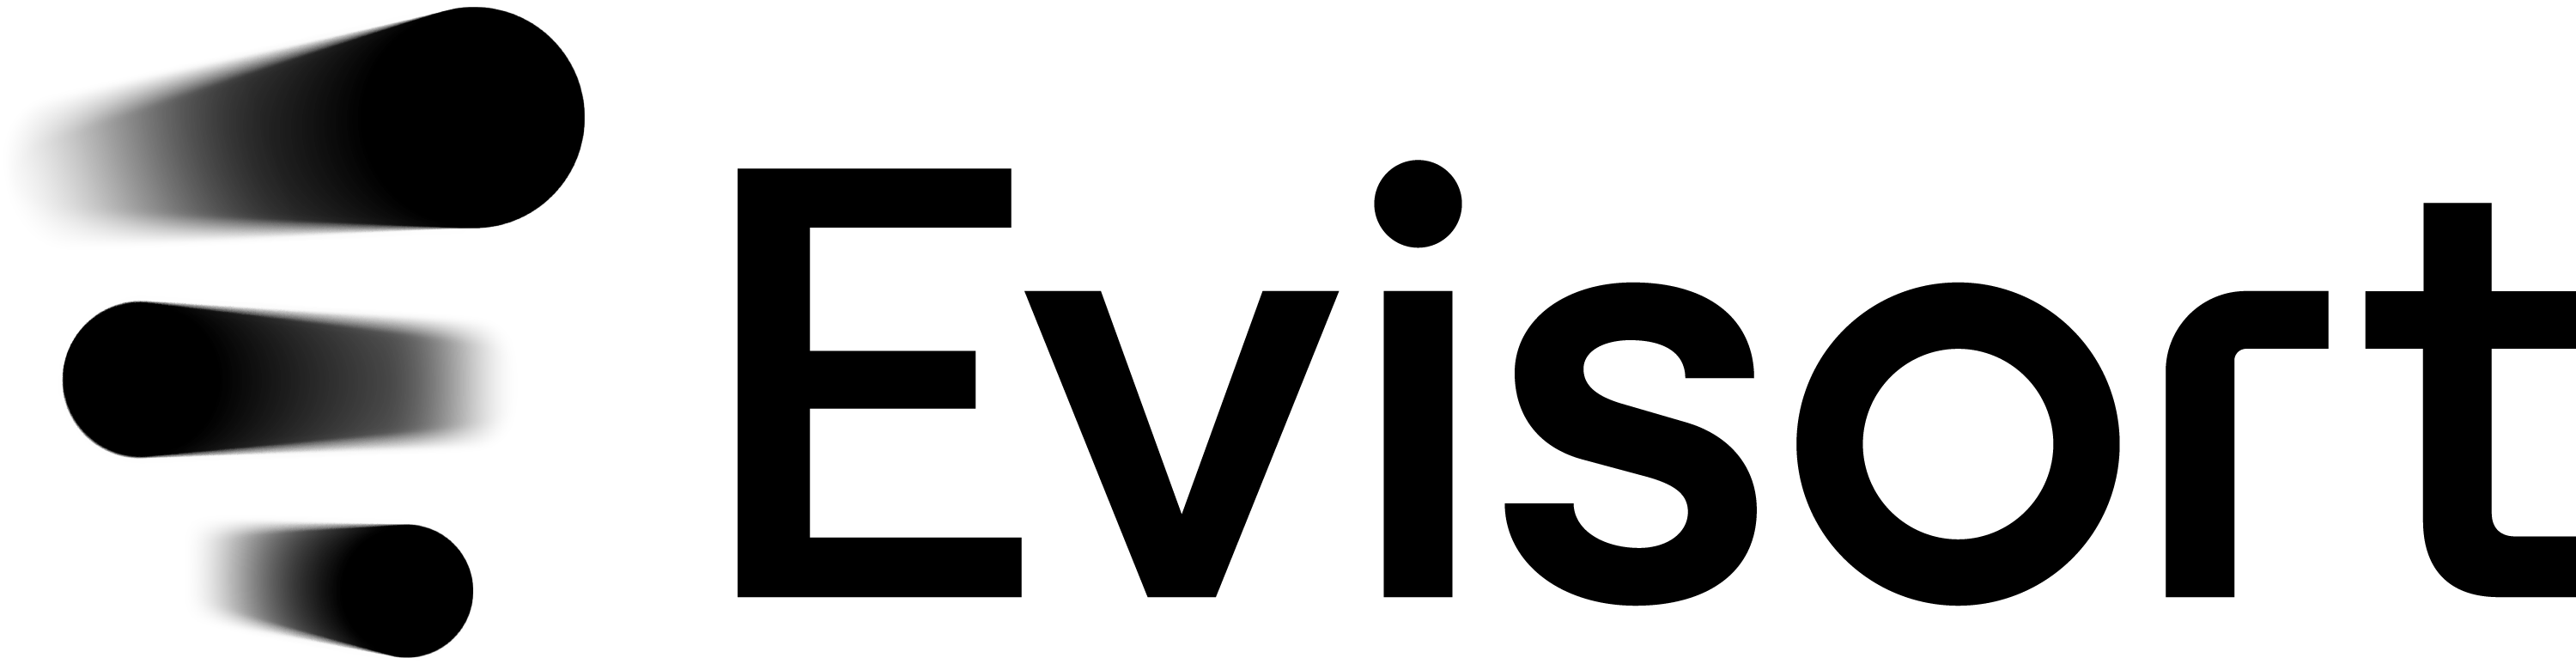 Evisort Logo